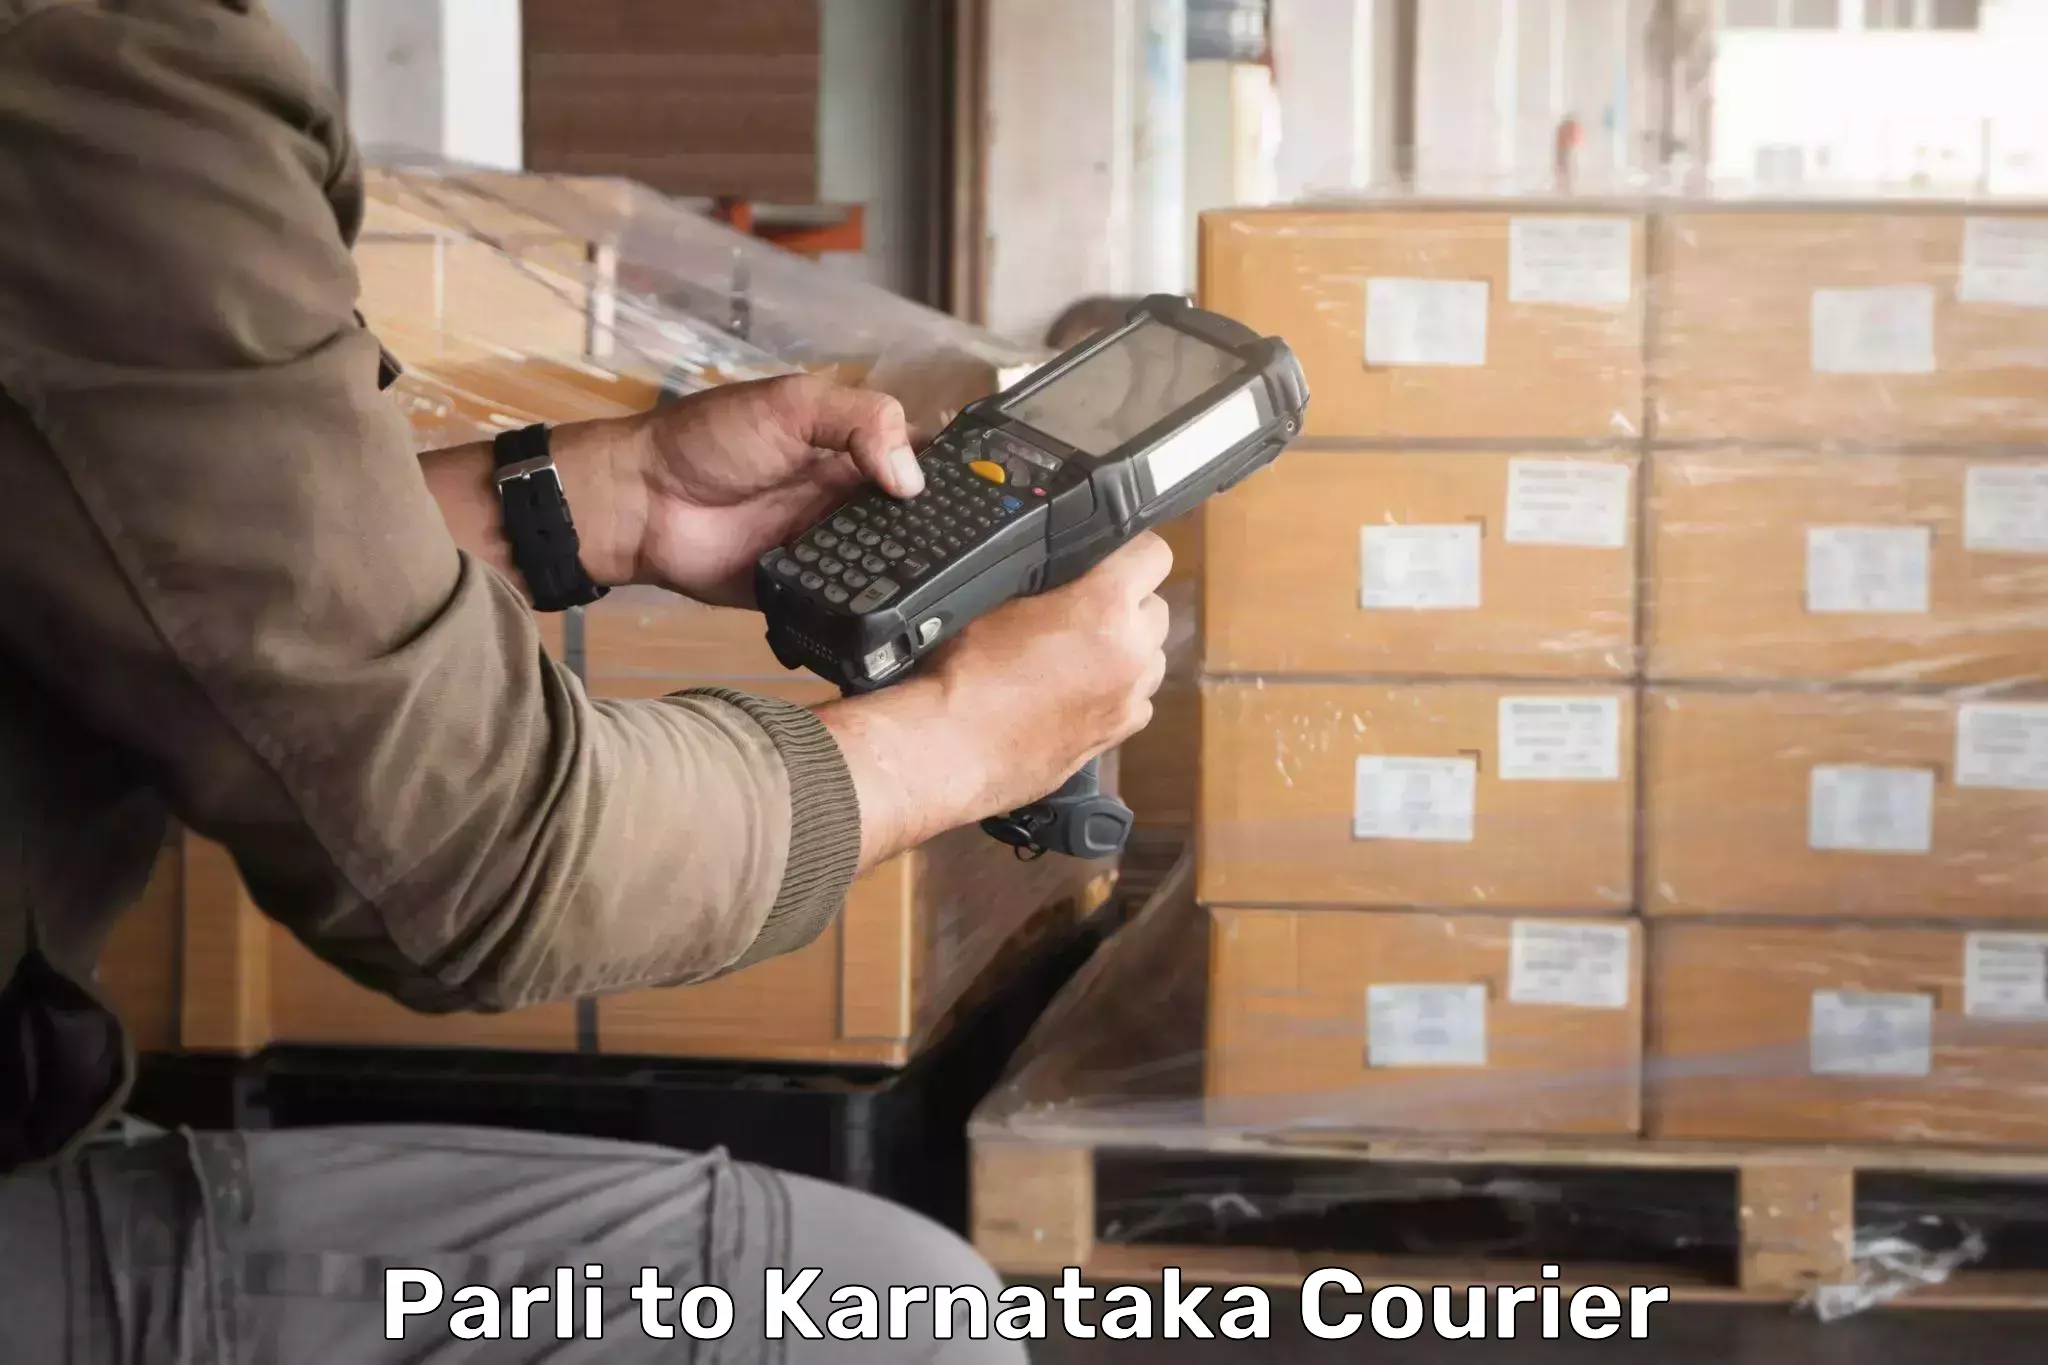 On-call courier service Parli to Karnataka